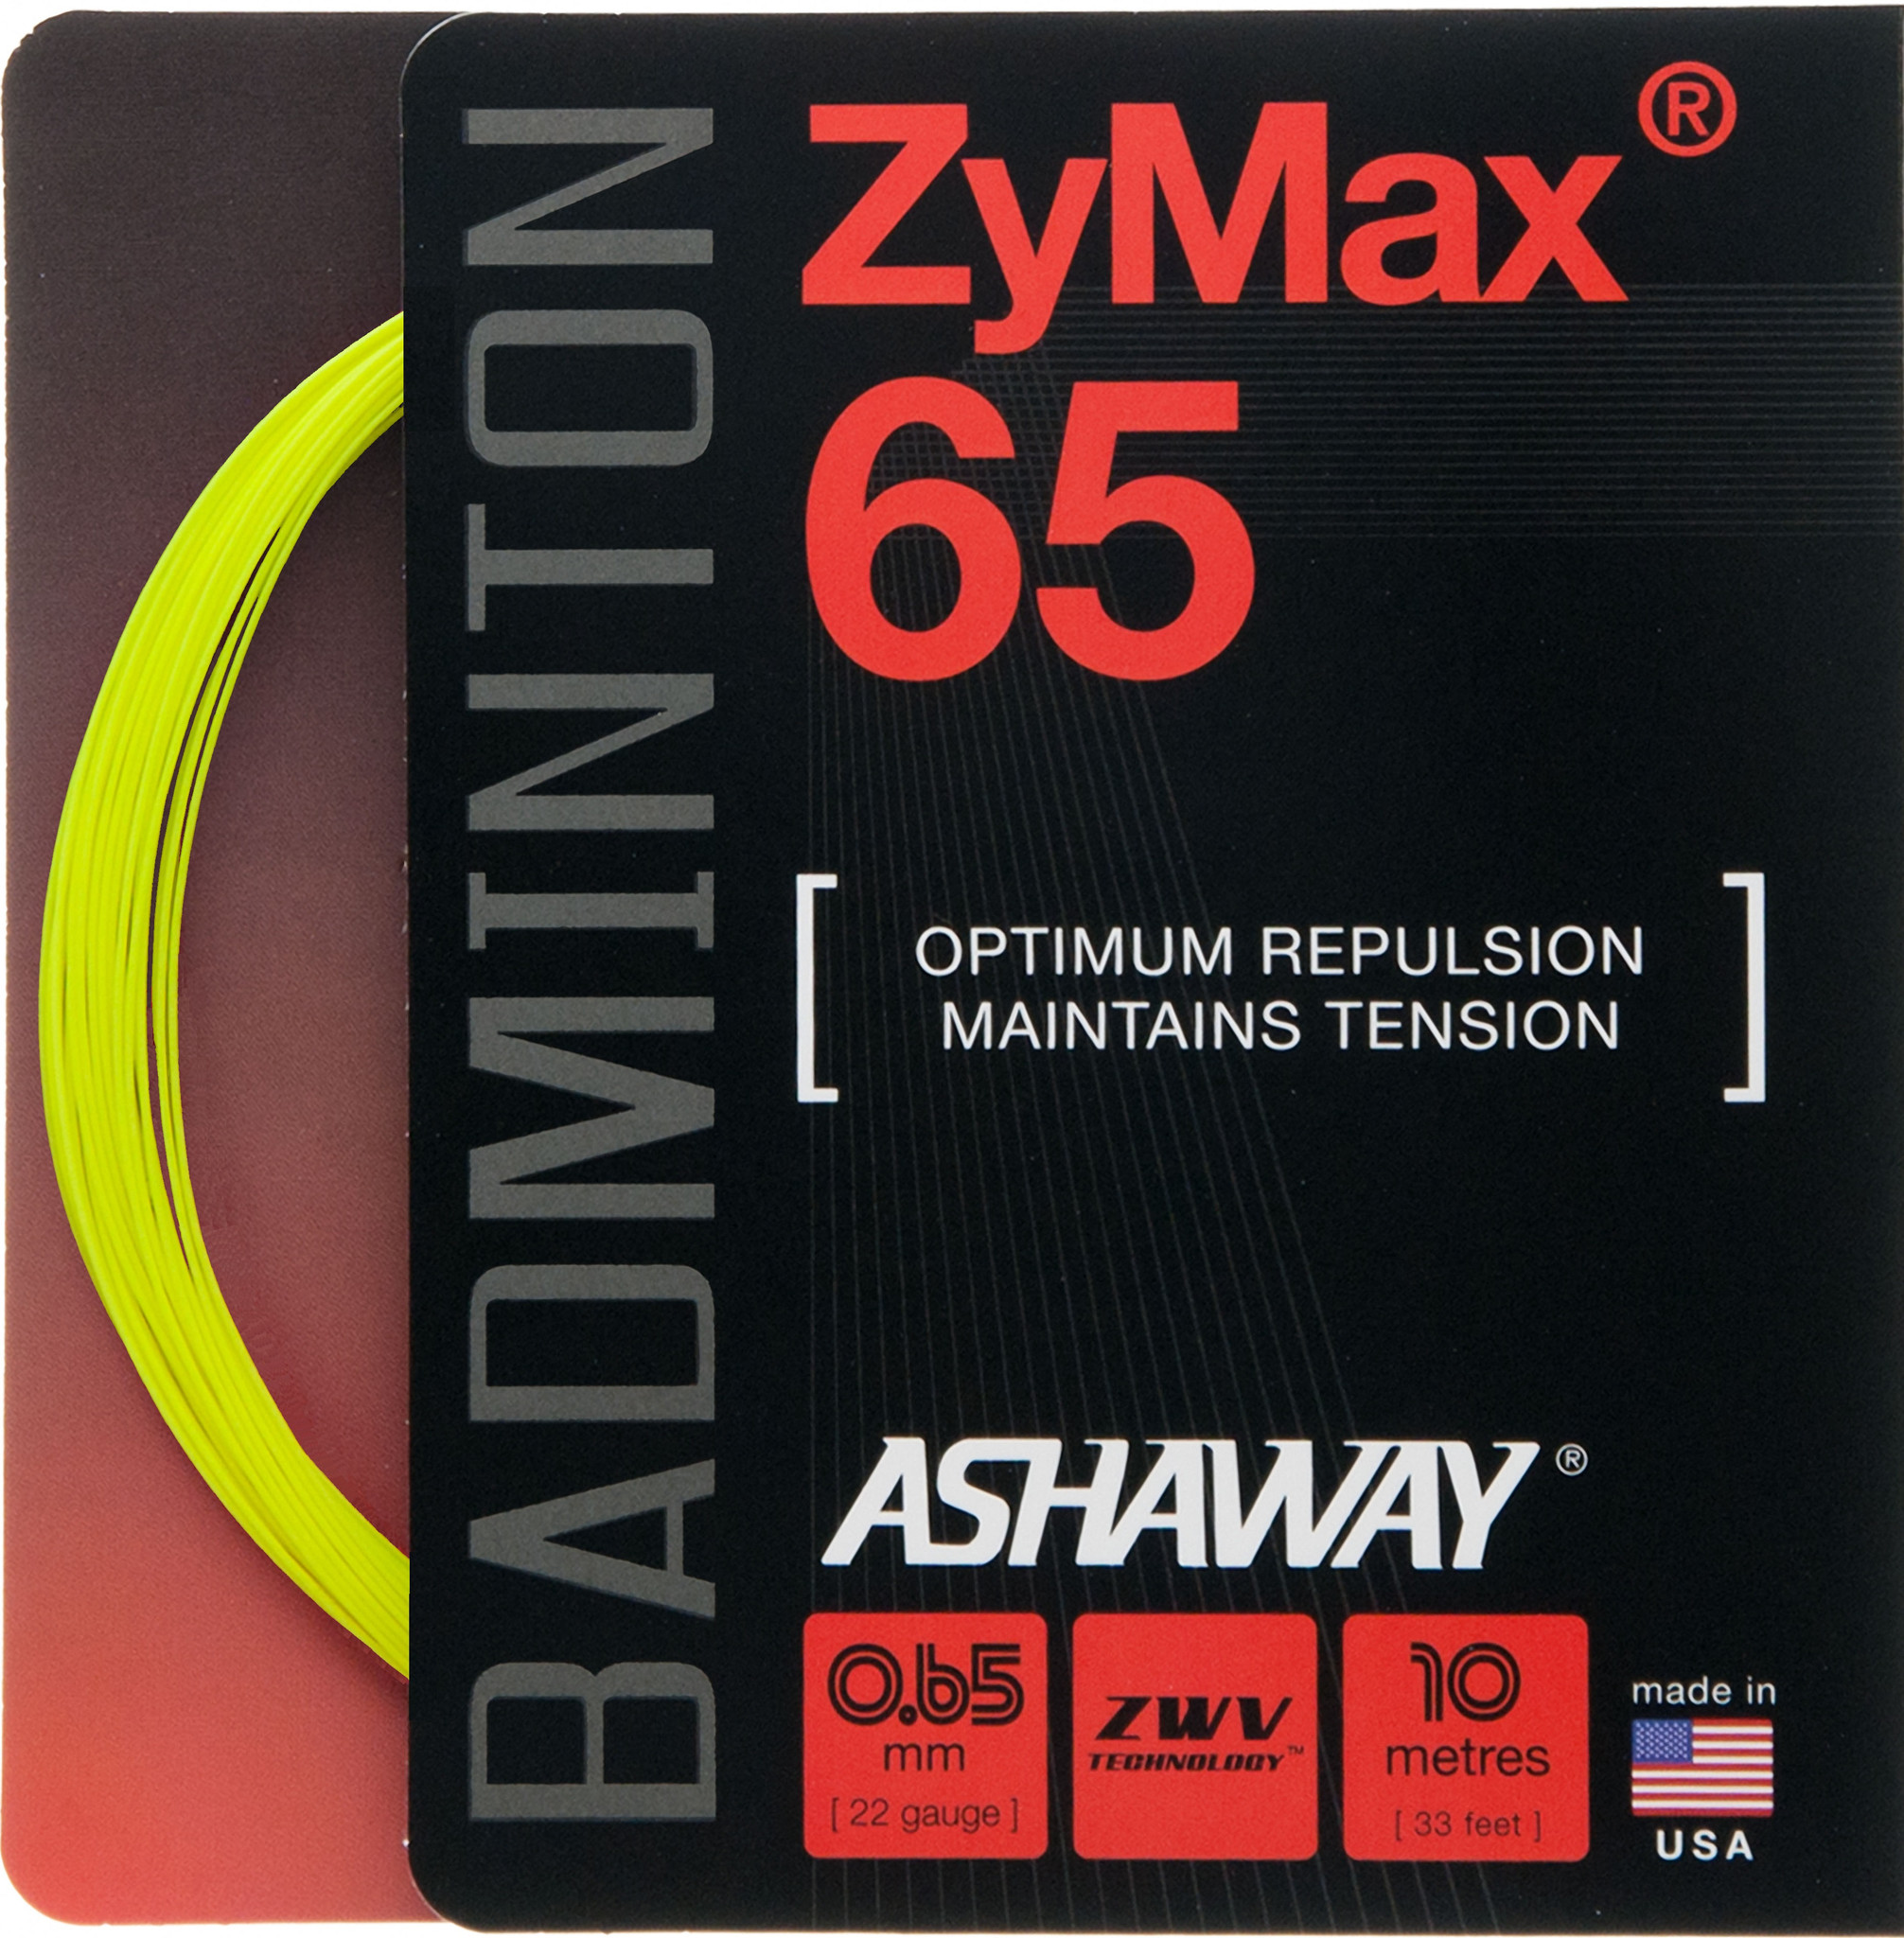 Ashaway Zymax 65 10m - Click Image to Close